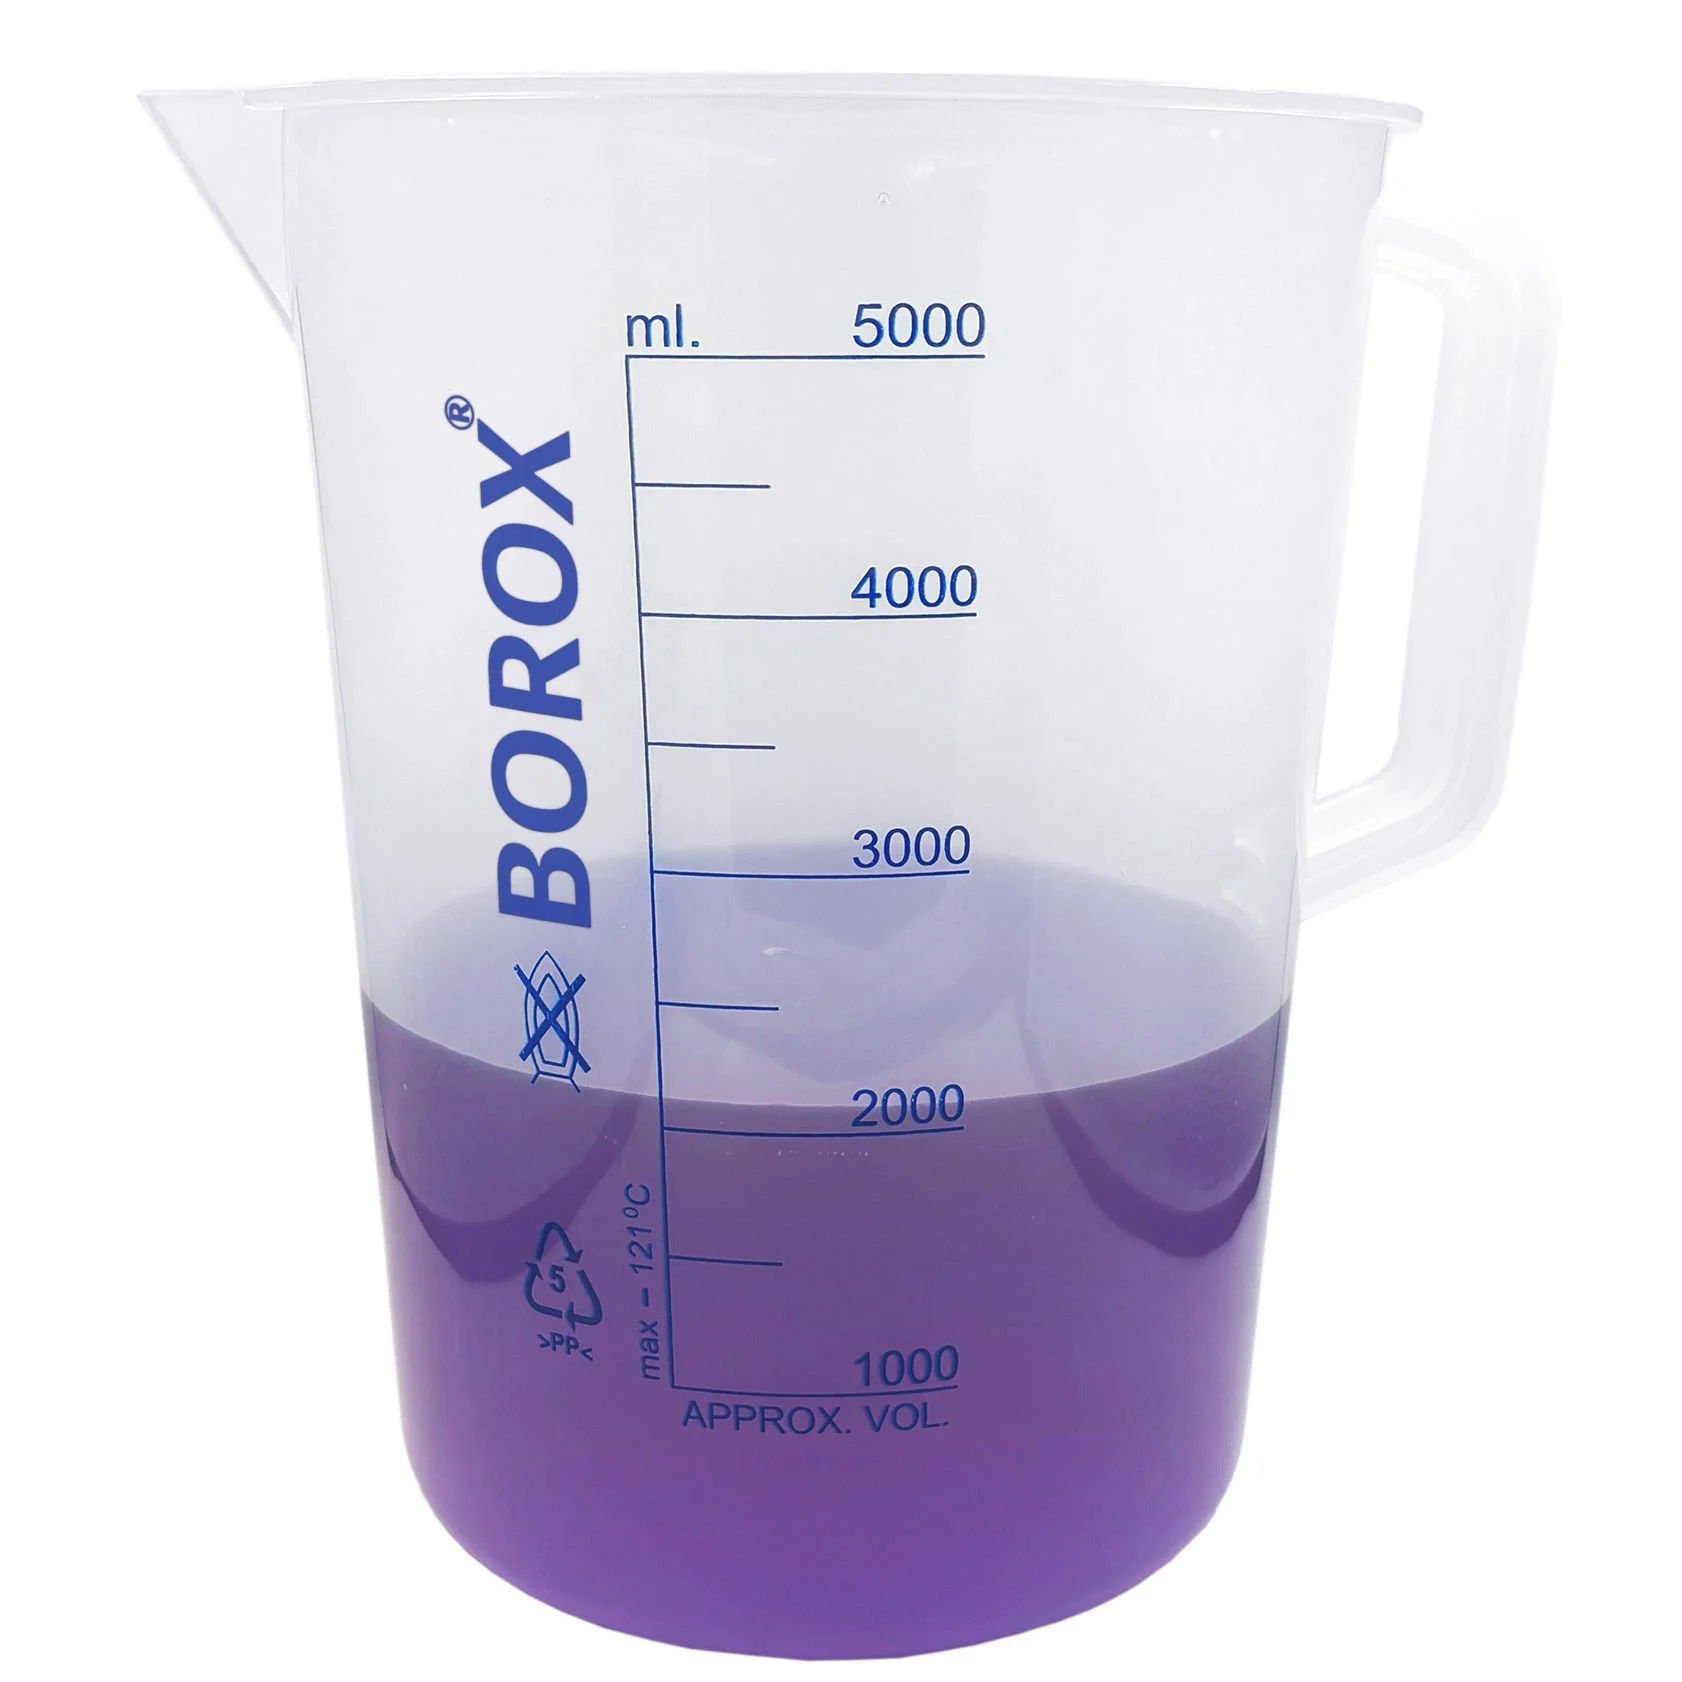 Borox Kulplu Plastik Beher 5000 ml - Ölçü Kabı - Mavi Skala